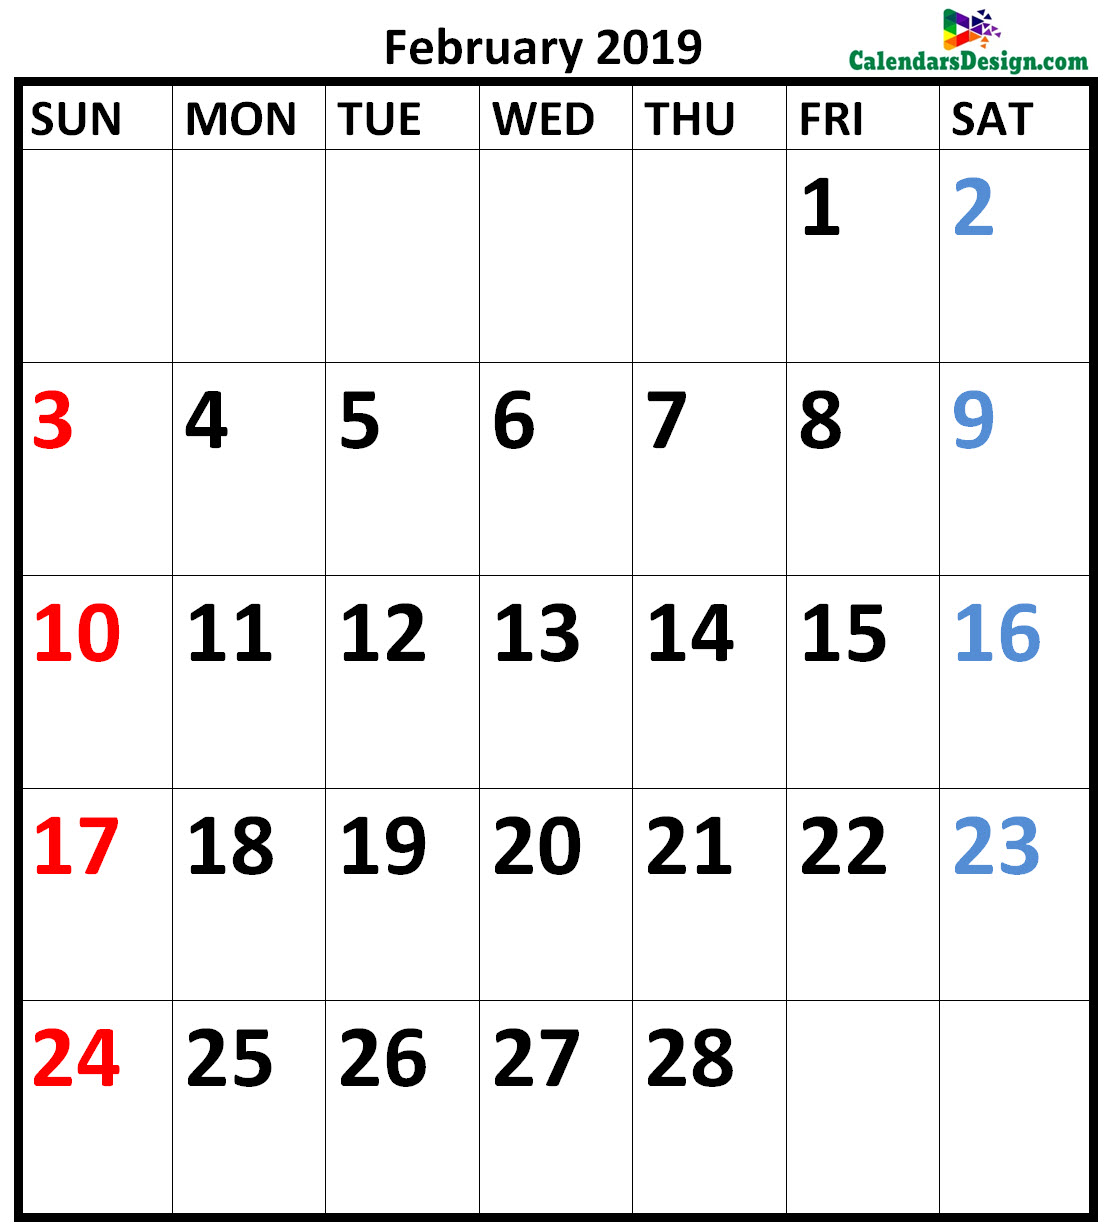 February 2019 Calendar A4 Size